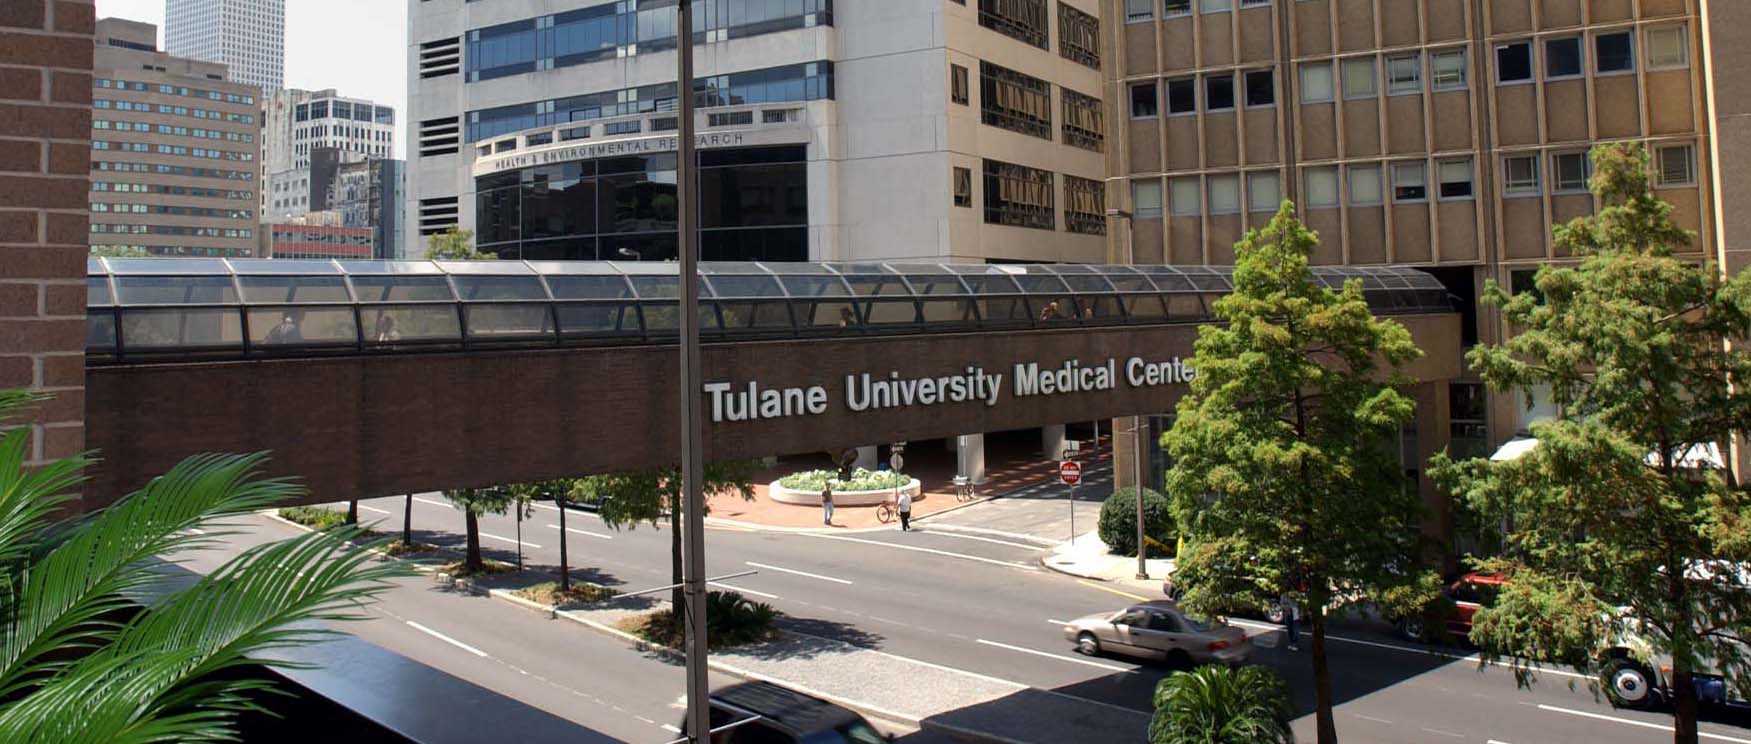 Tulane_University_Medical_Center_(3629702117) copy